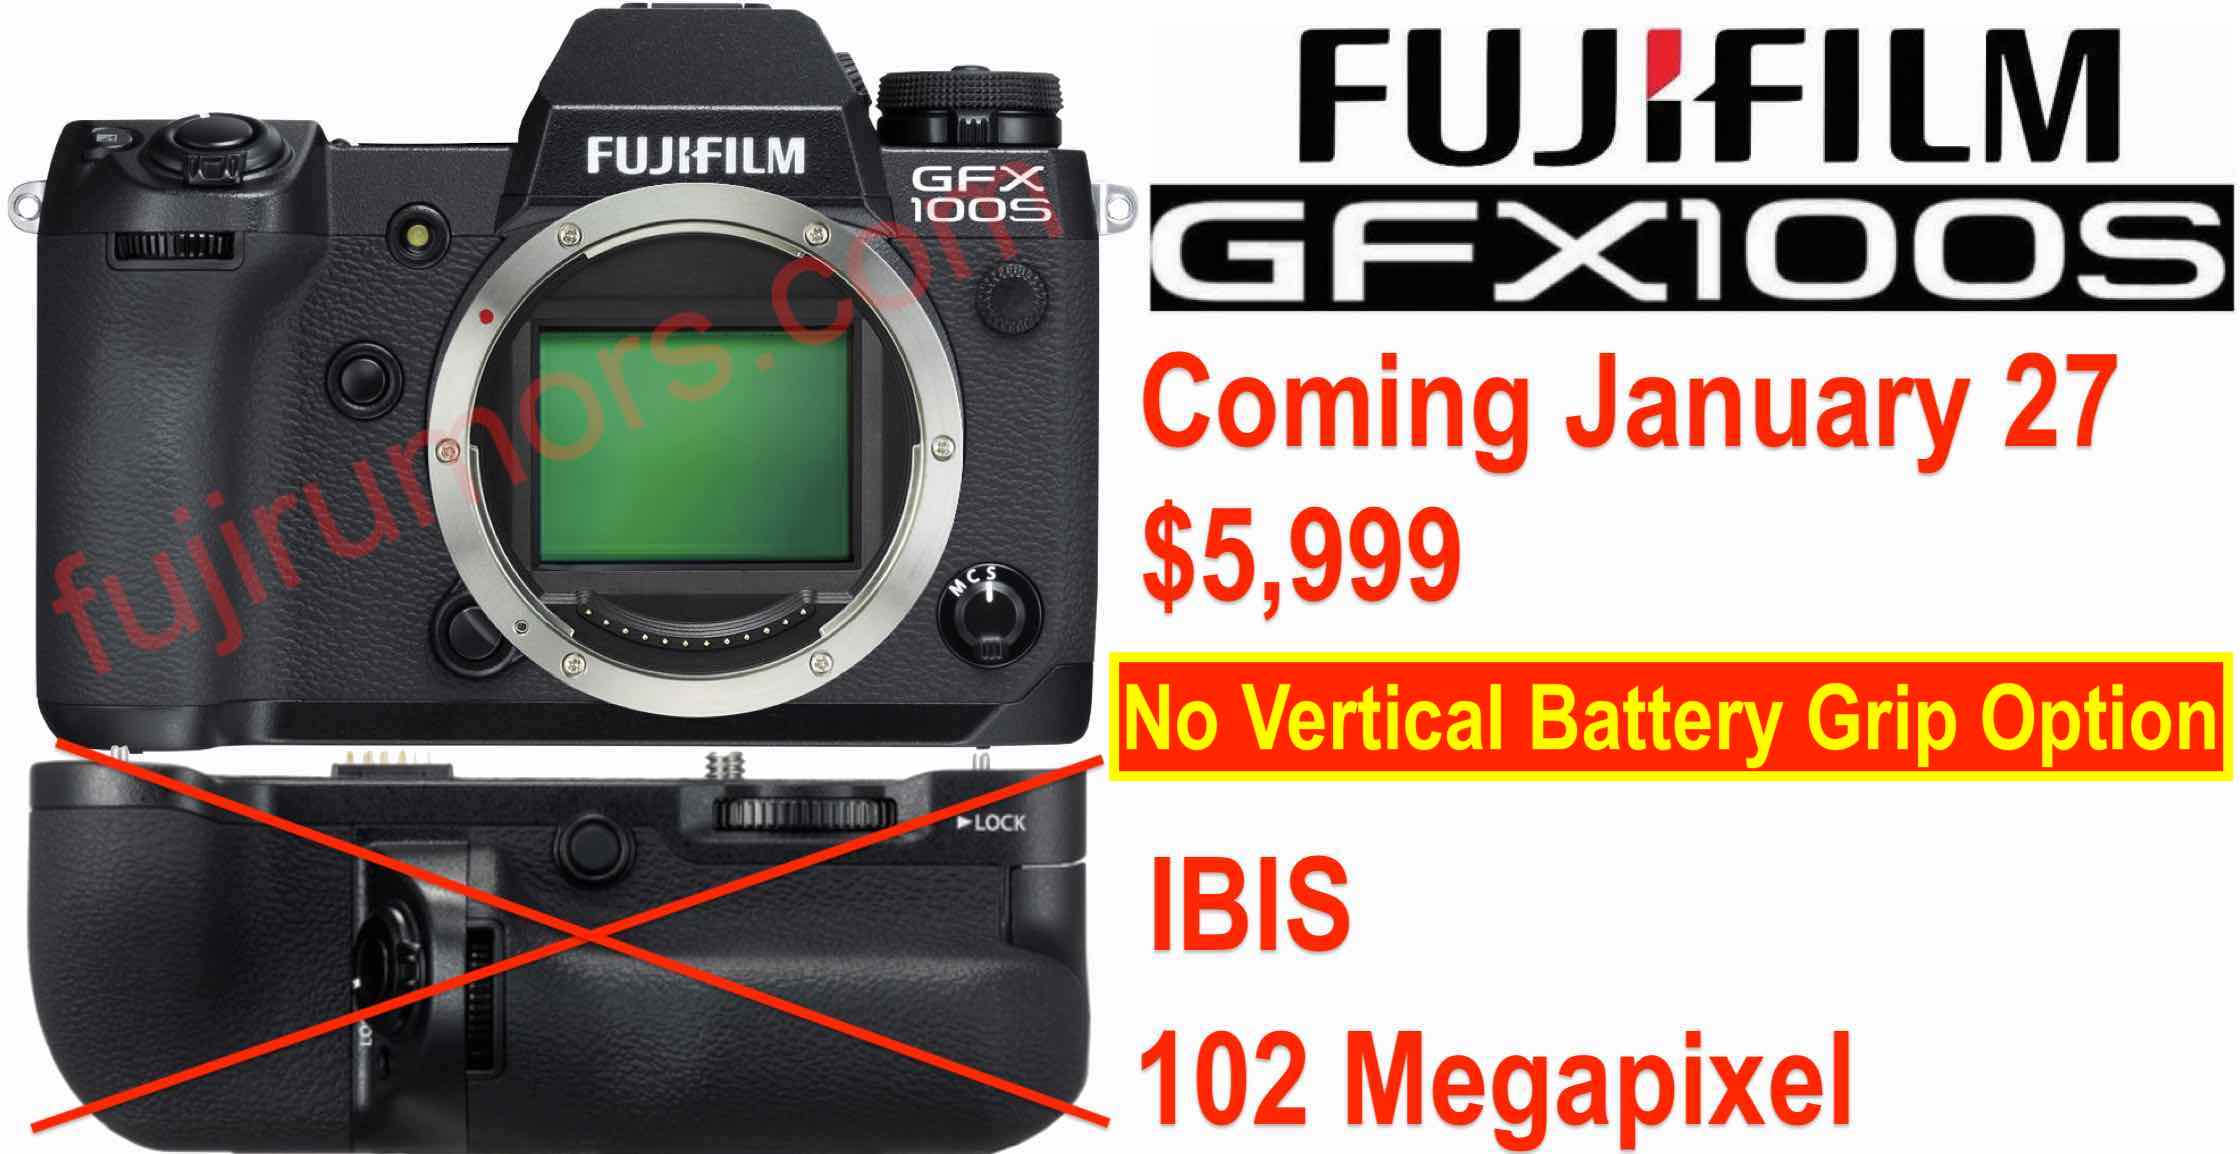 Fujifilm Gfx100s No Vertical Battery Grip Option Fuji Rumors